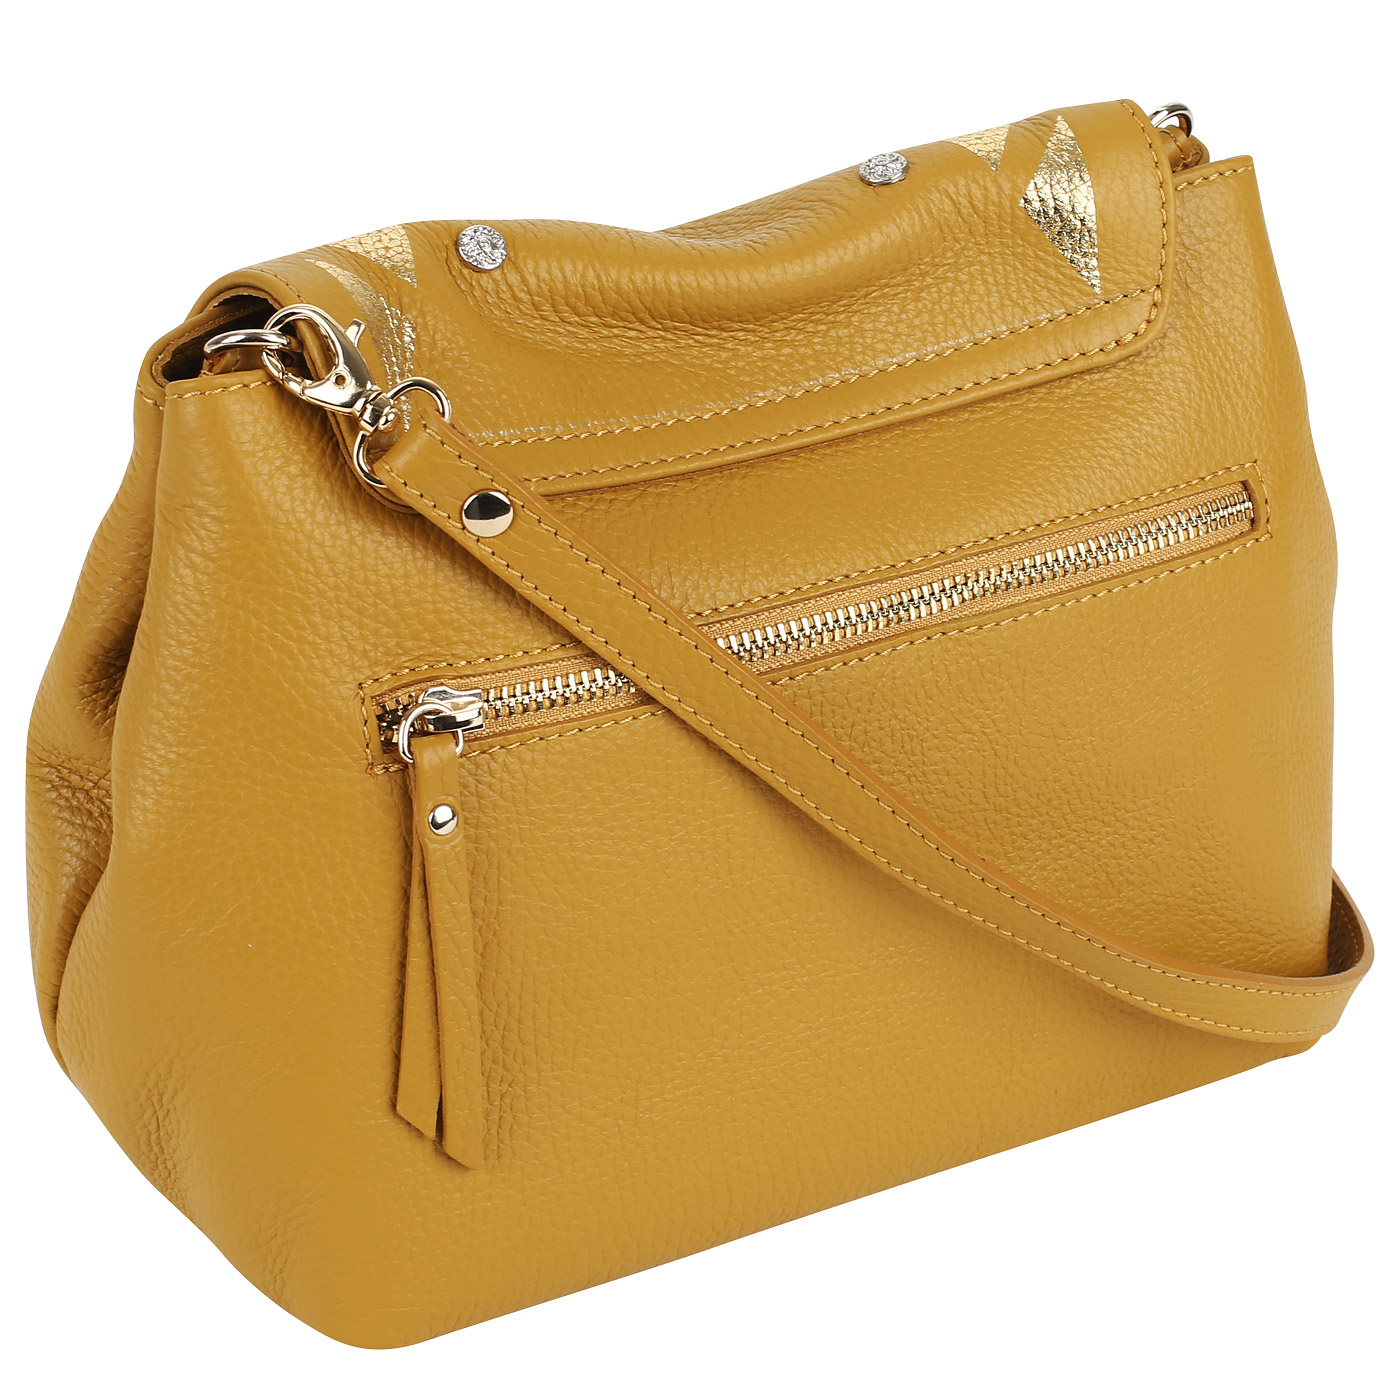 Жёлто-коричневая кожаная сумка Marina Creazioni 